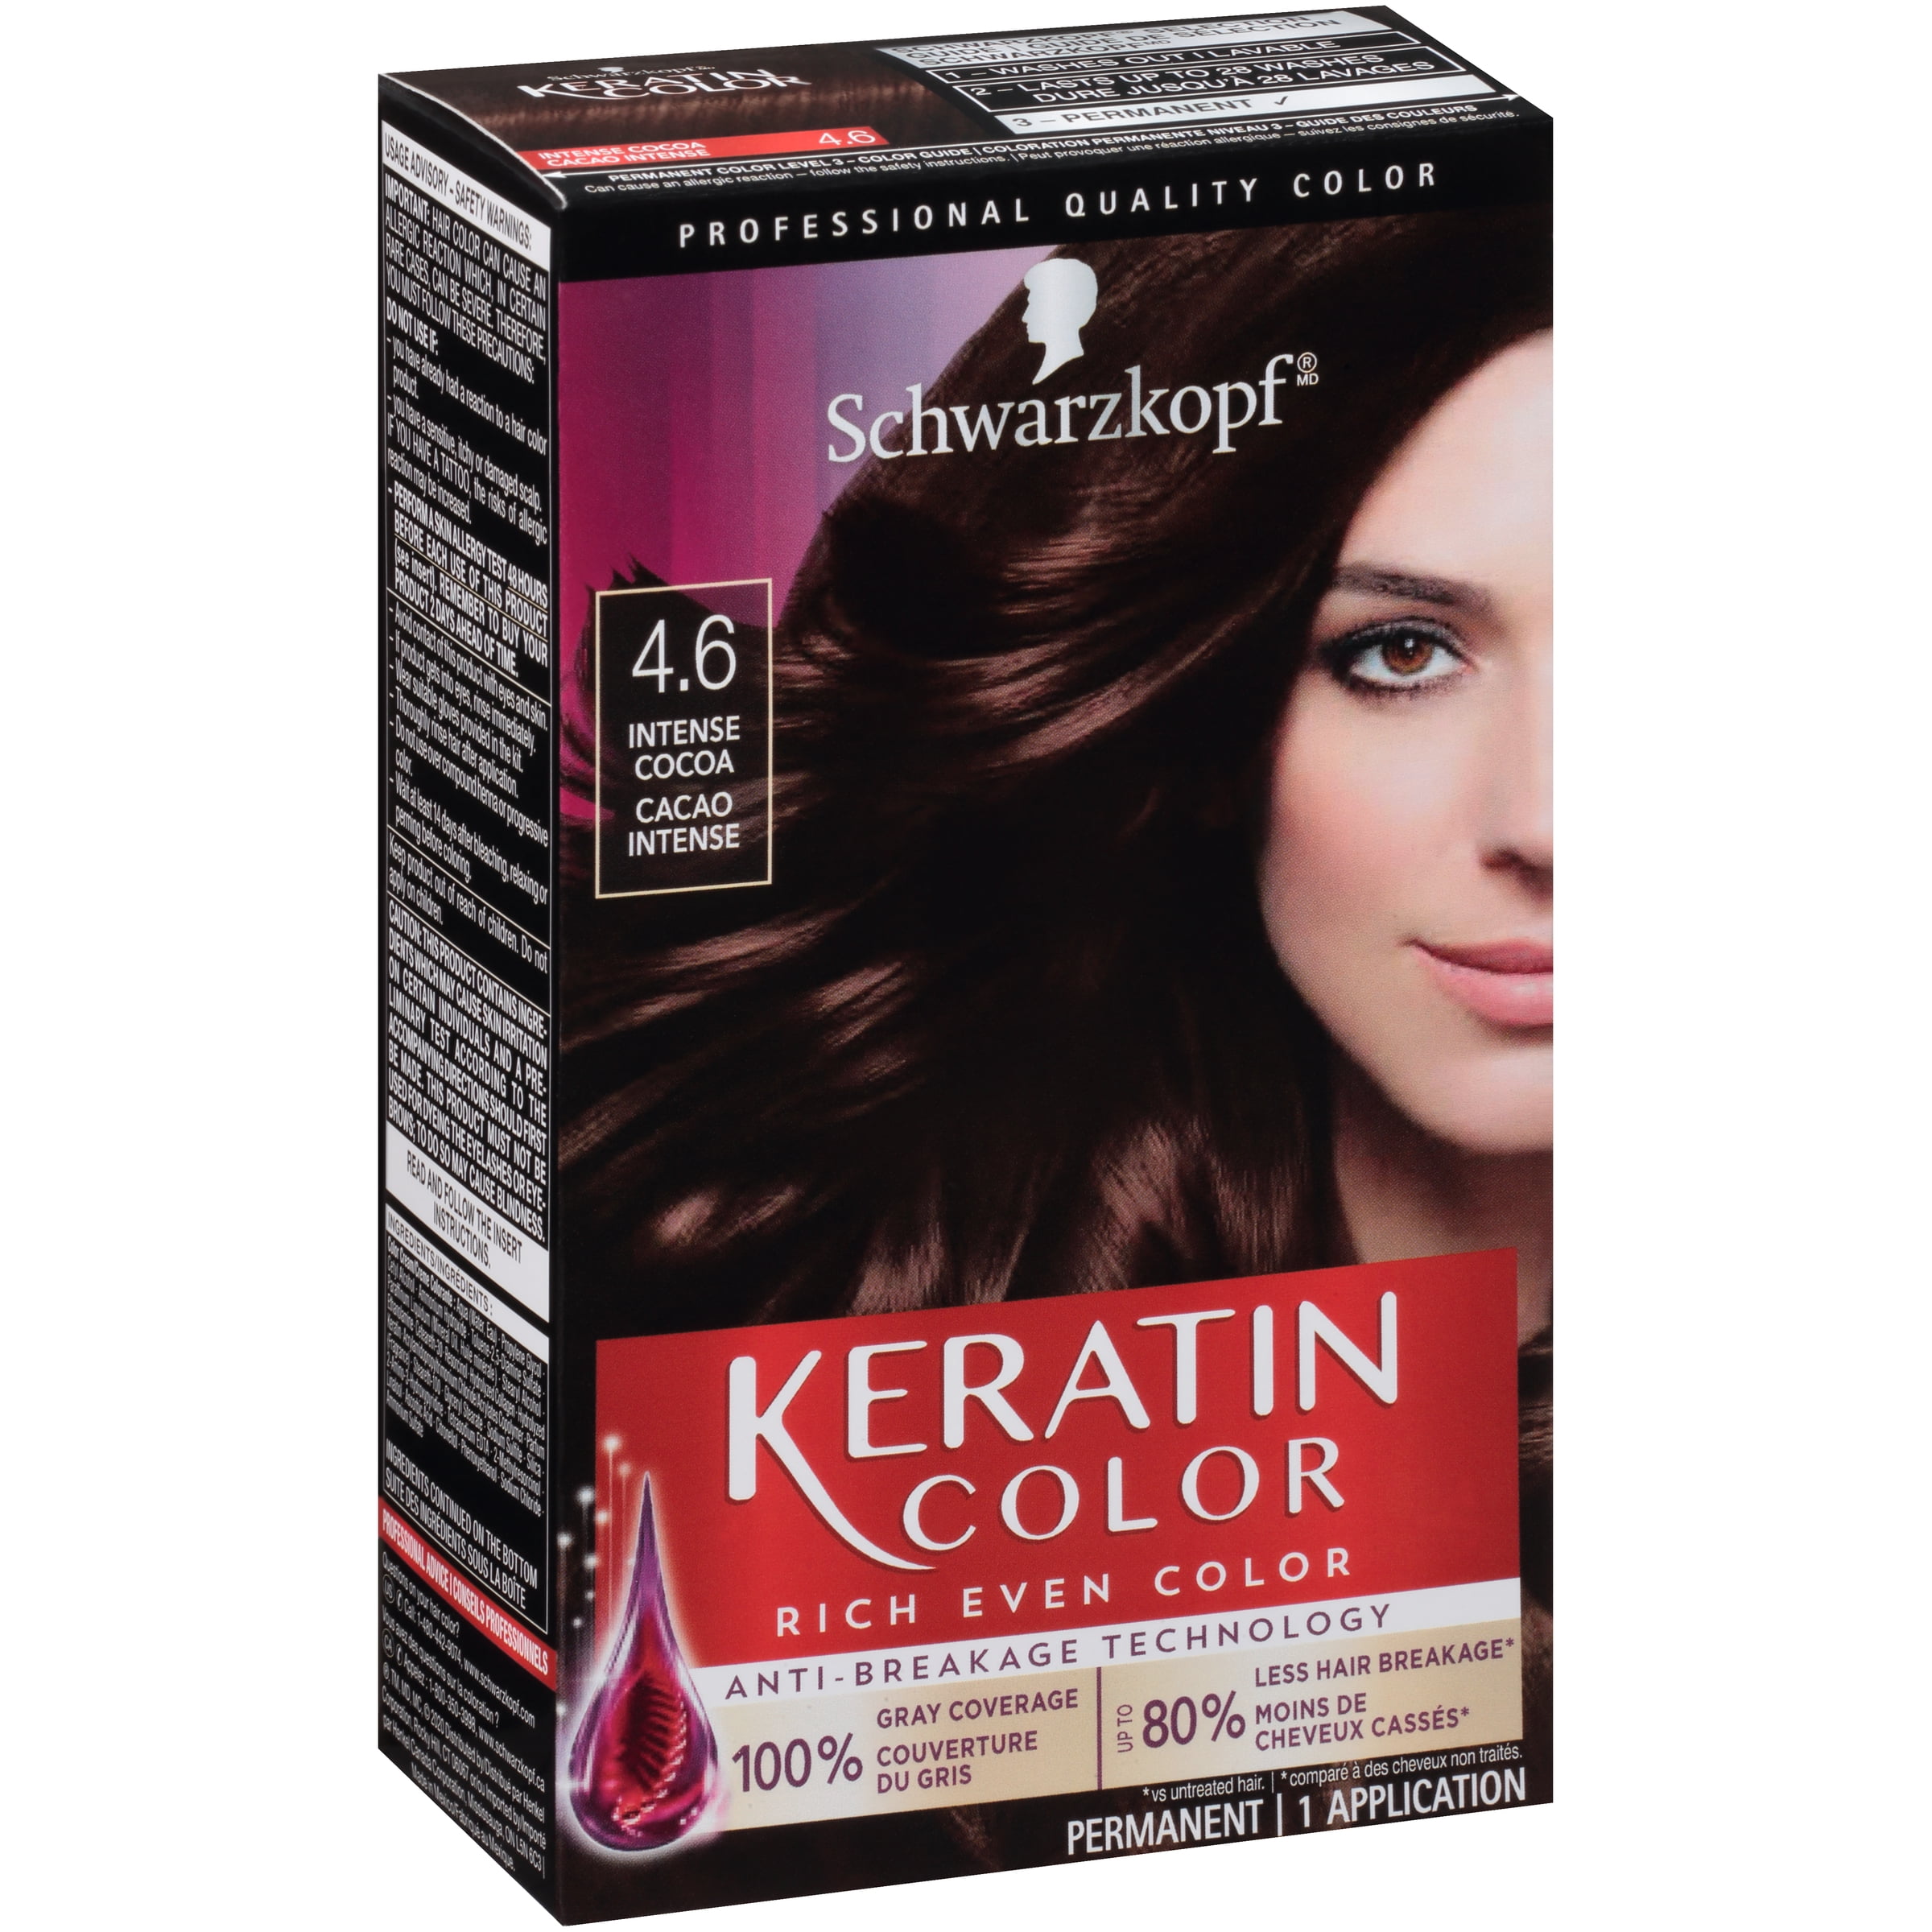 Schwarzkopf Keratin Color Permanent Hair Color Cream,  Intense Cocoa -  